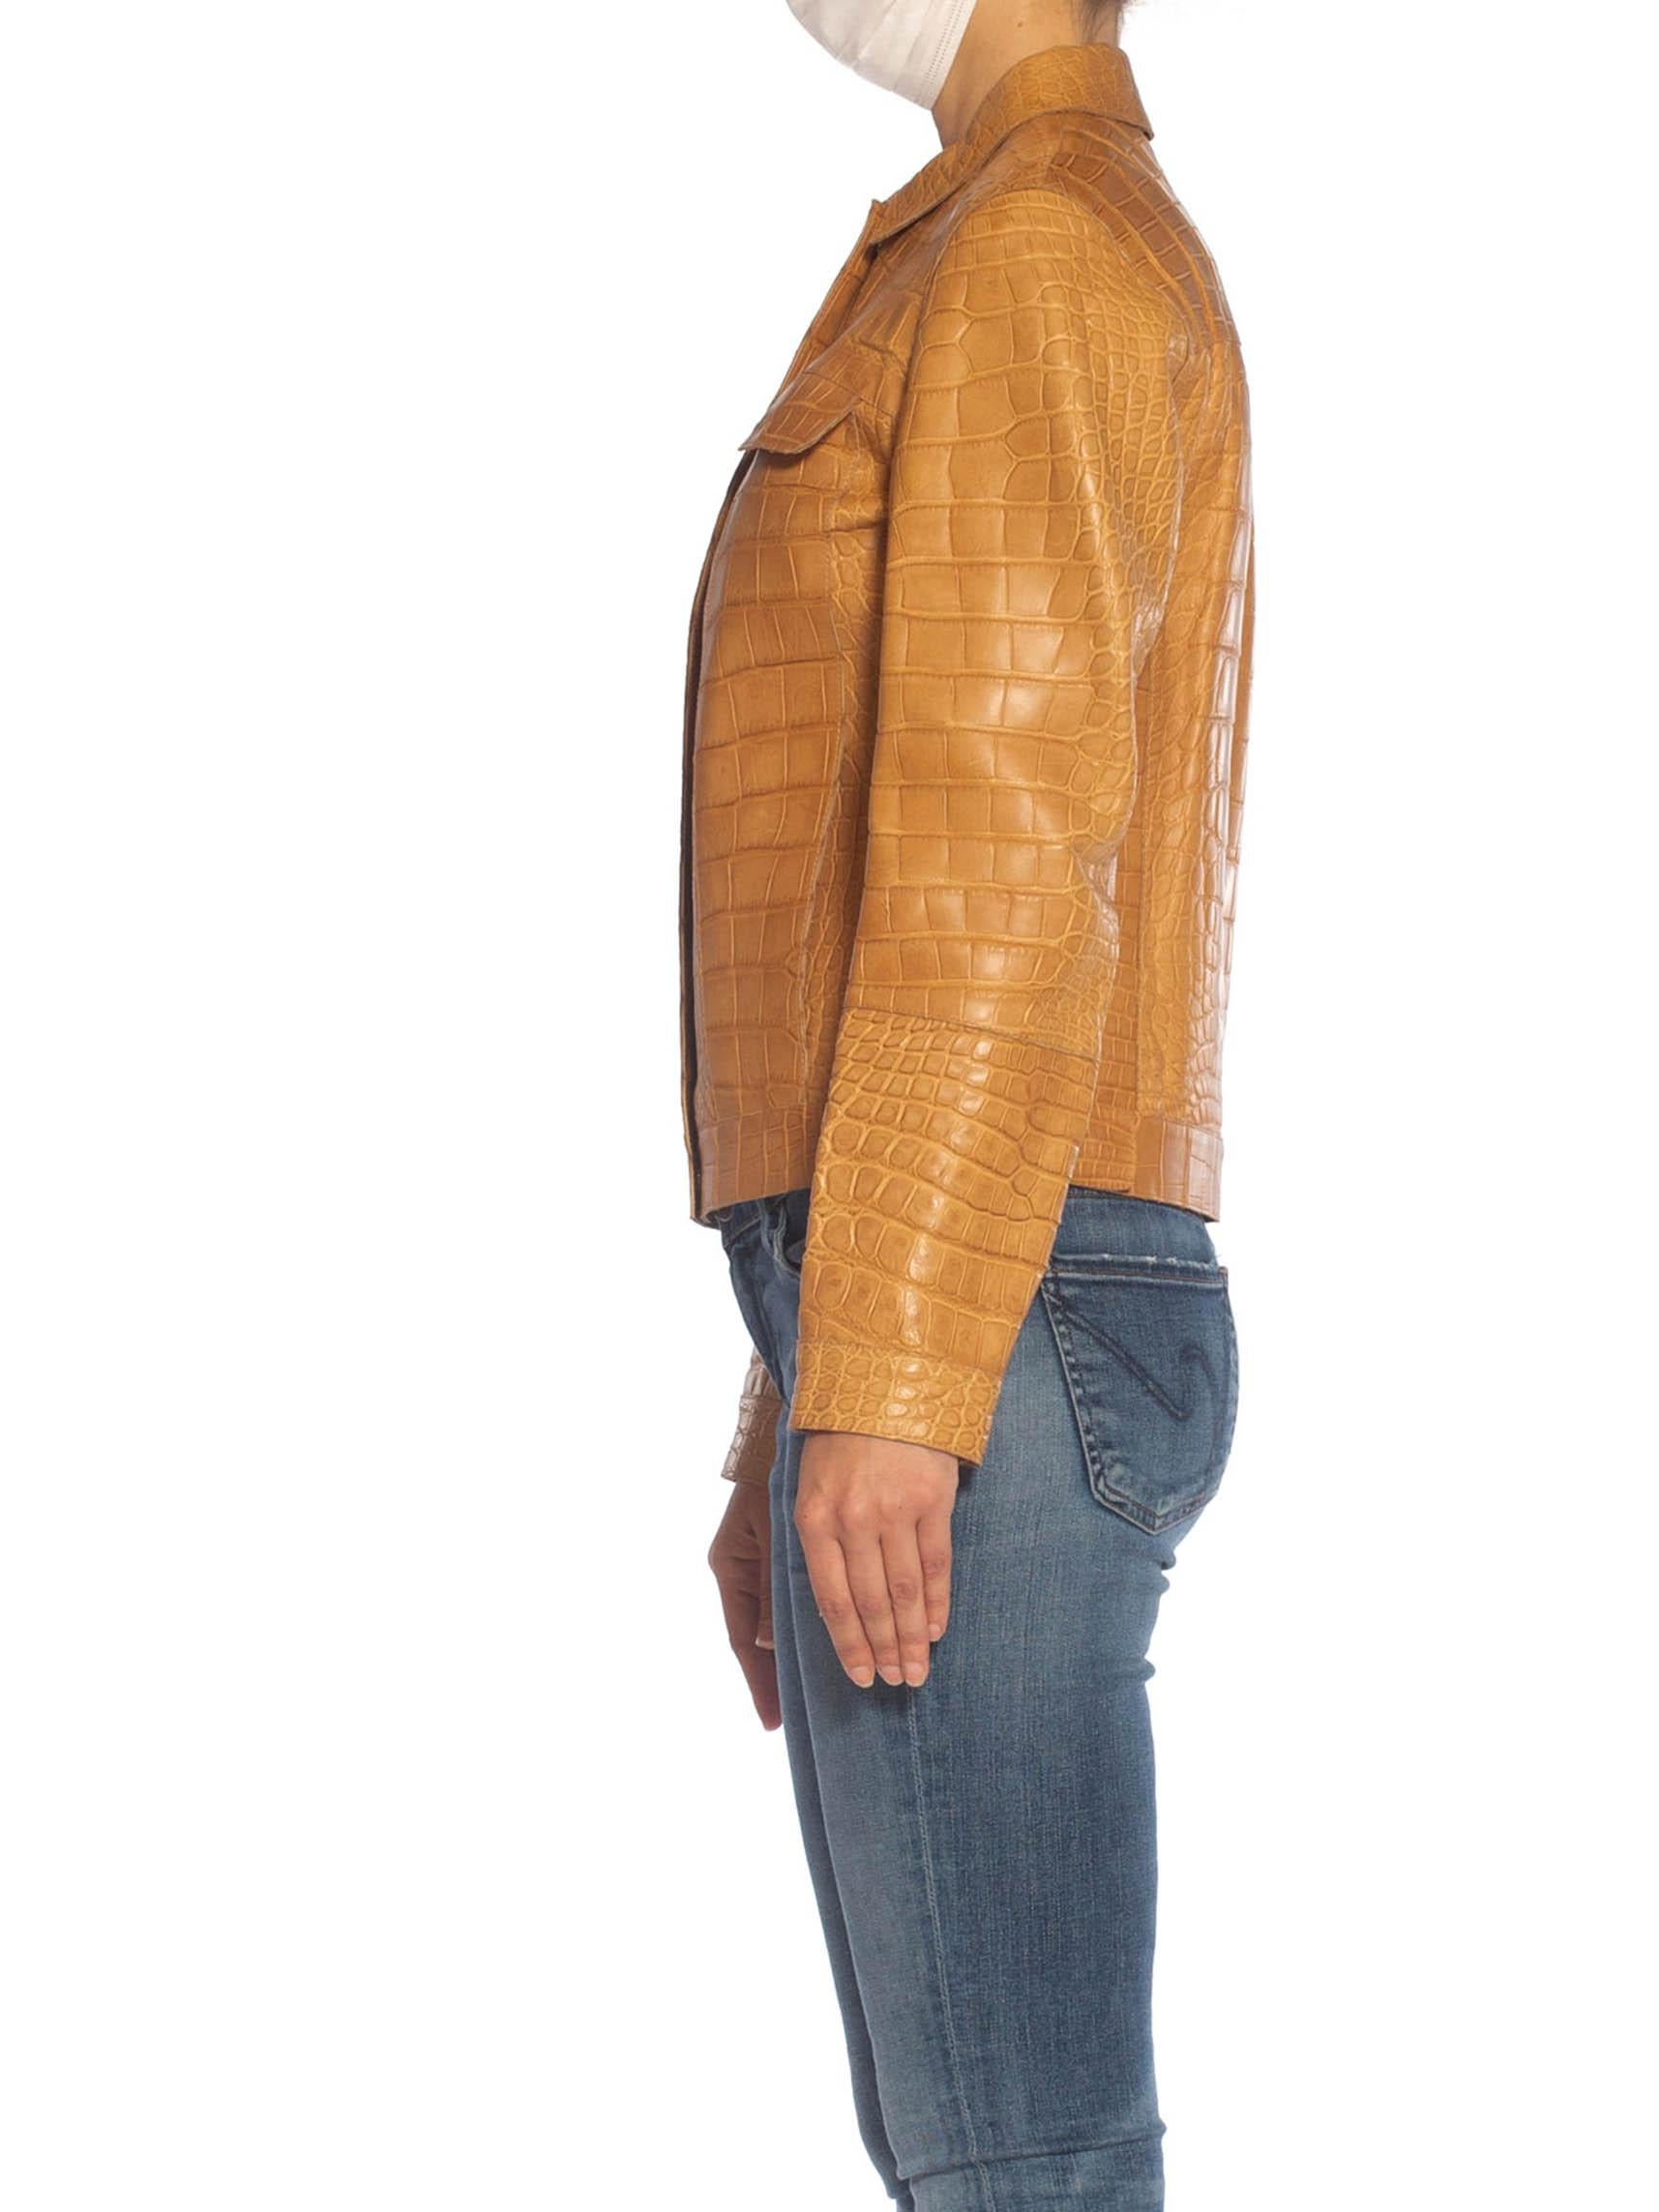 Orange 2000S PRADA Tan Alligator Leather Straight Jean Jacket Cut